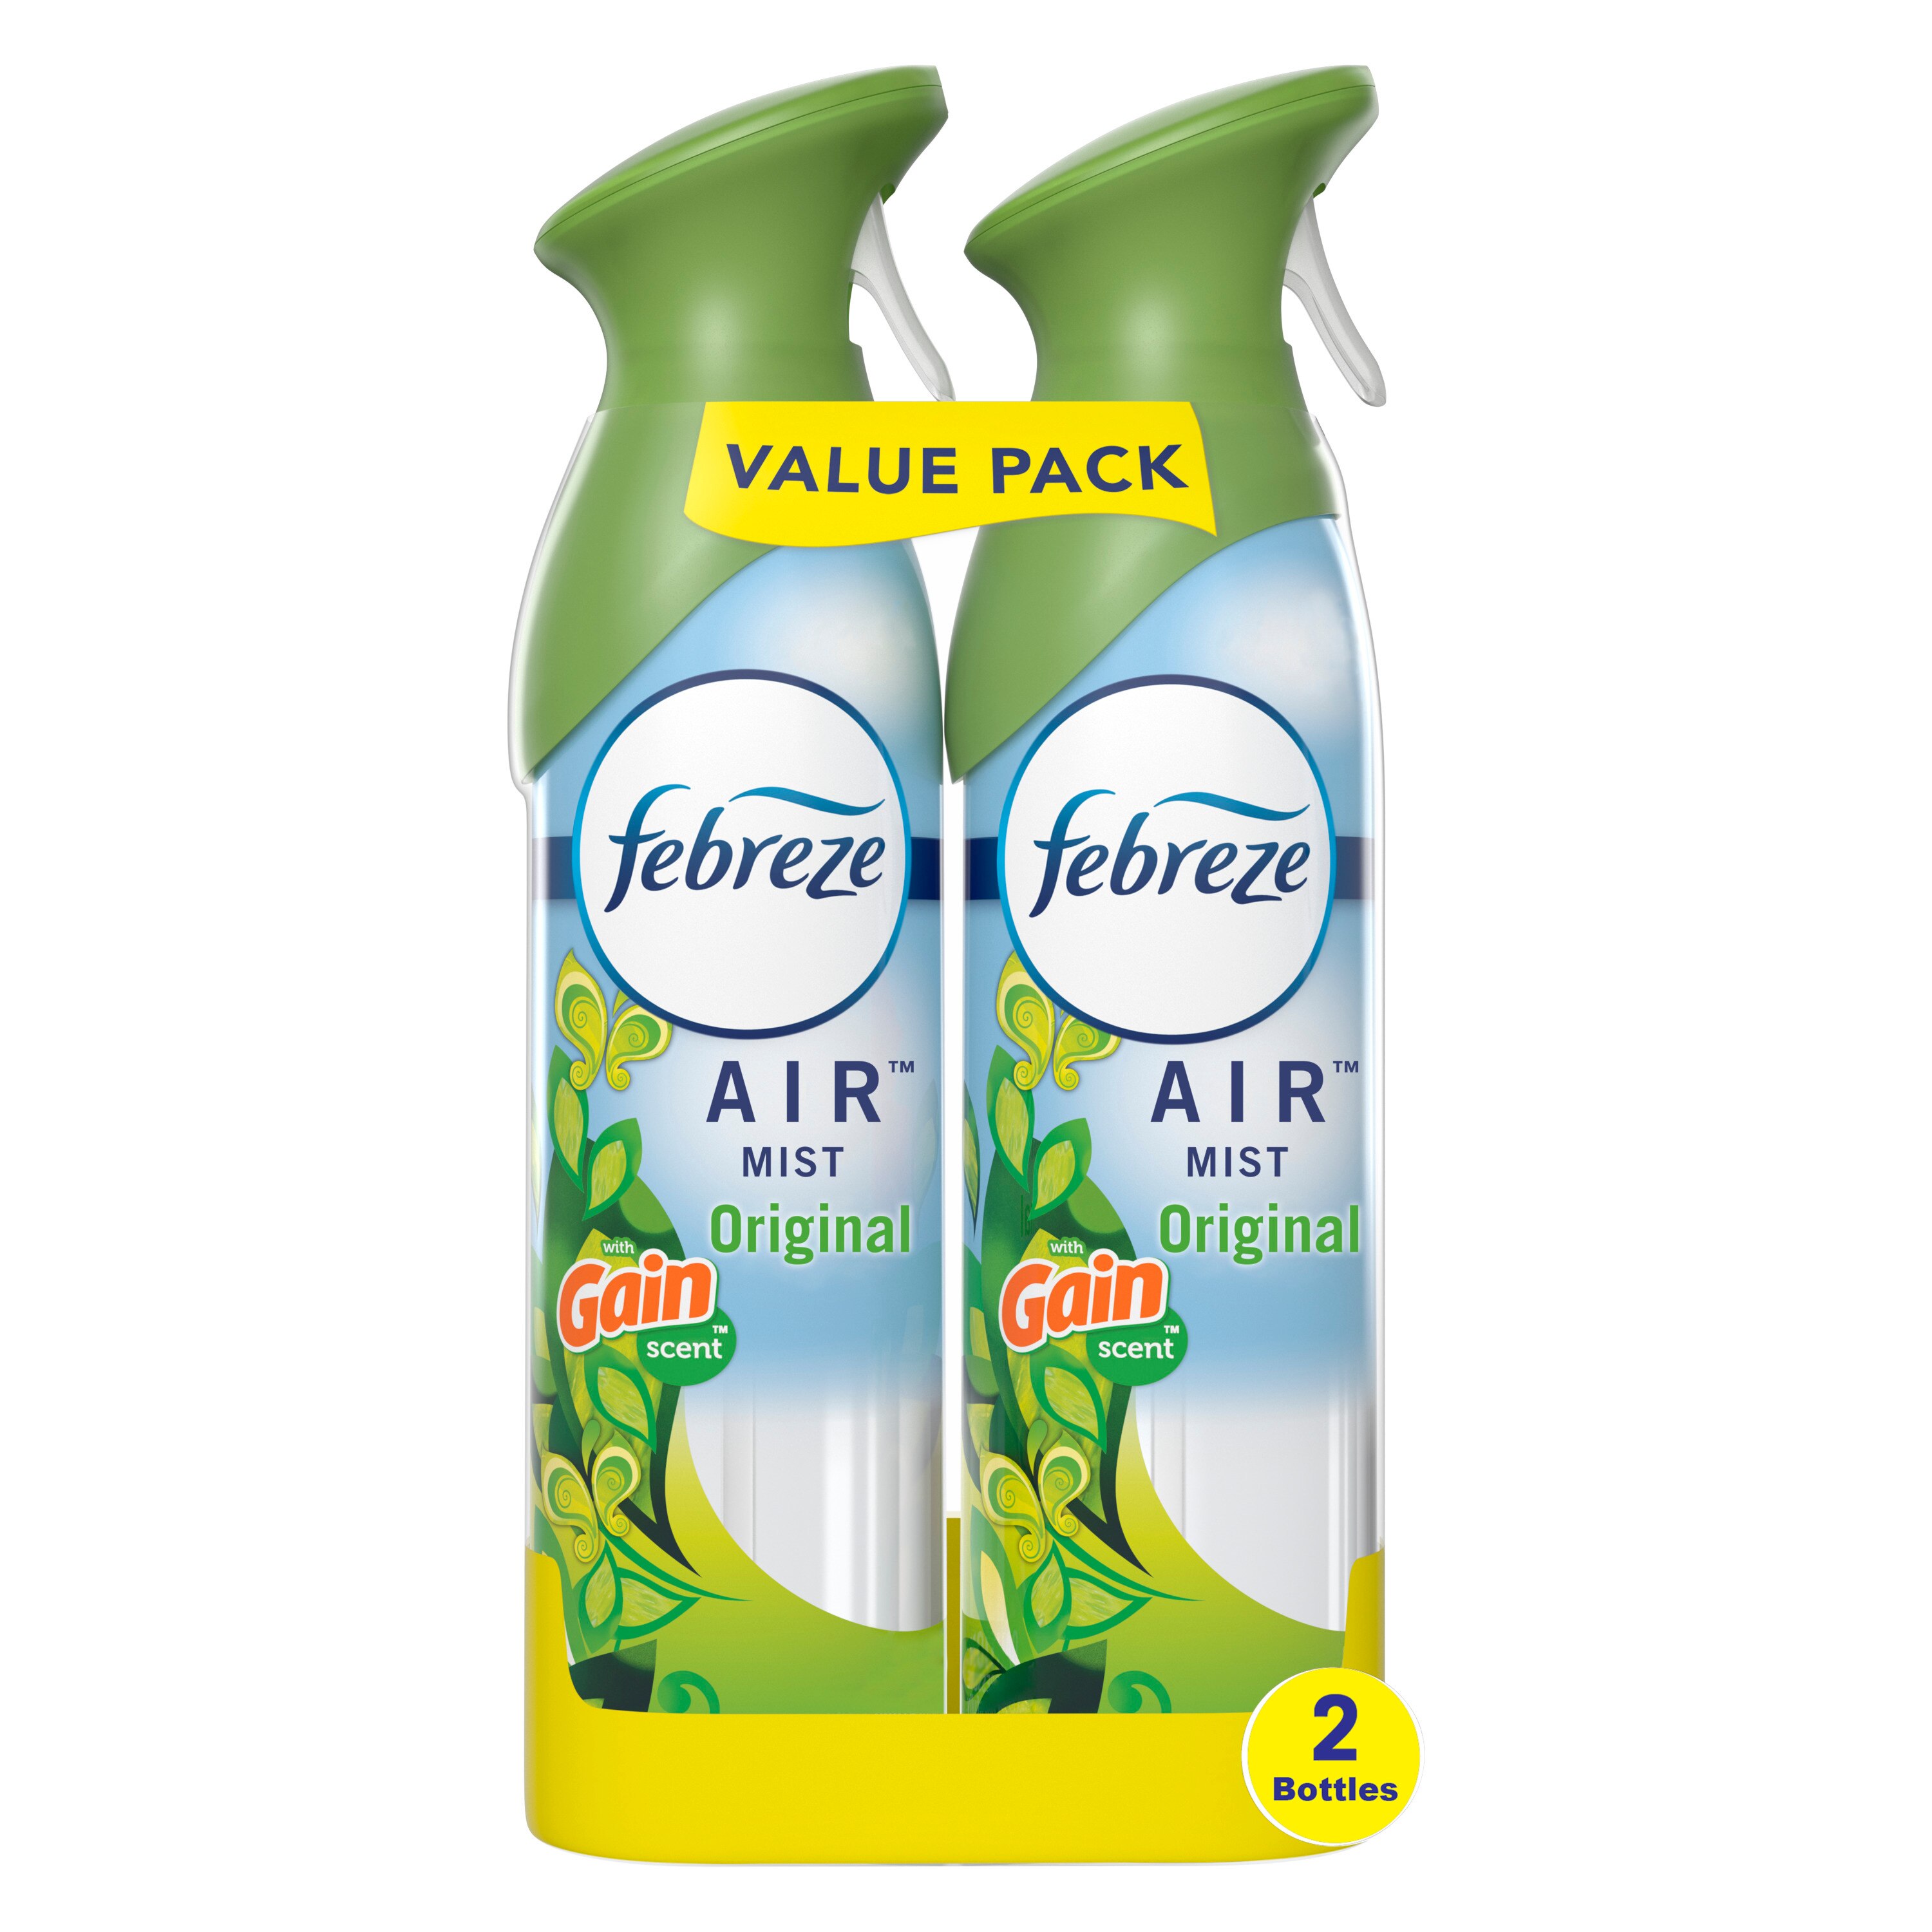 Febreze Odor-Fighting Air Freshener with Gain Original Scent, 2 pack , 8.8 oz